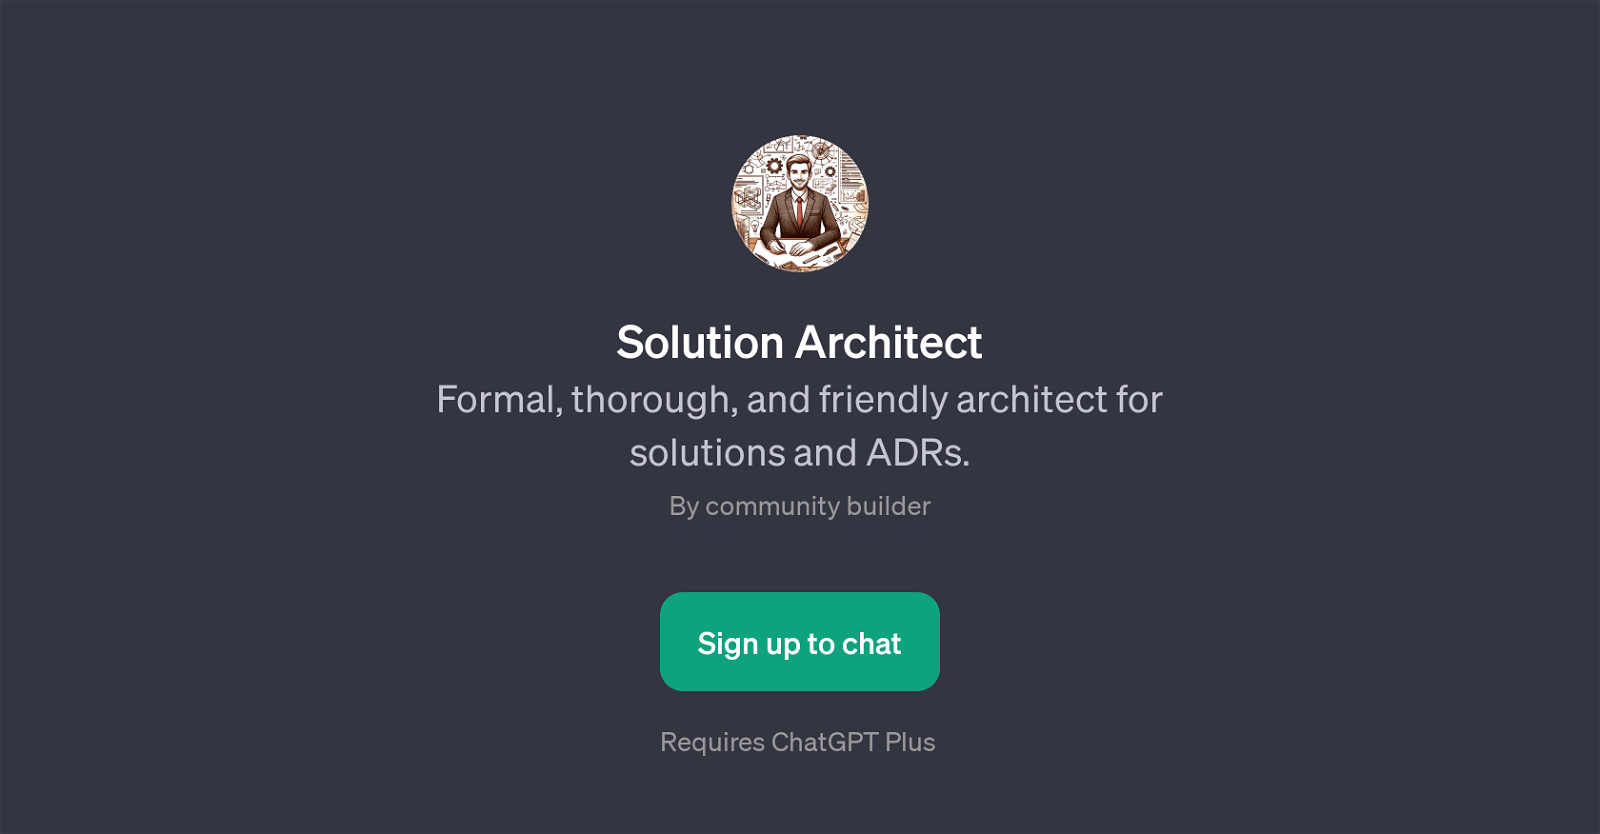 Solution Architect website